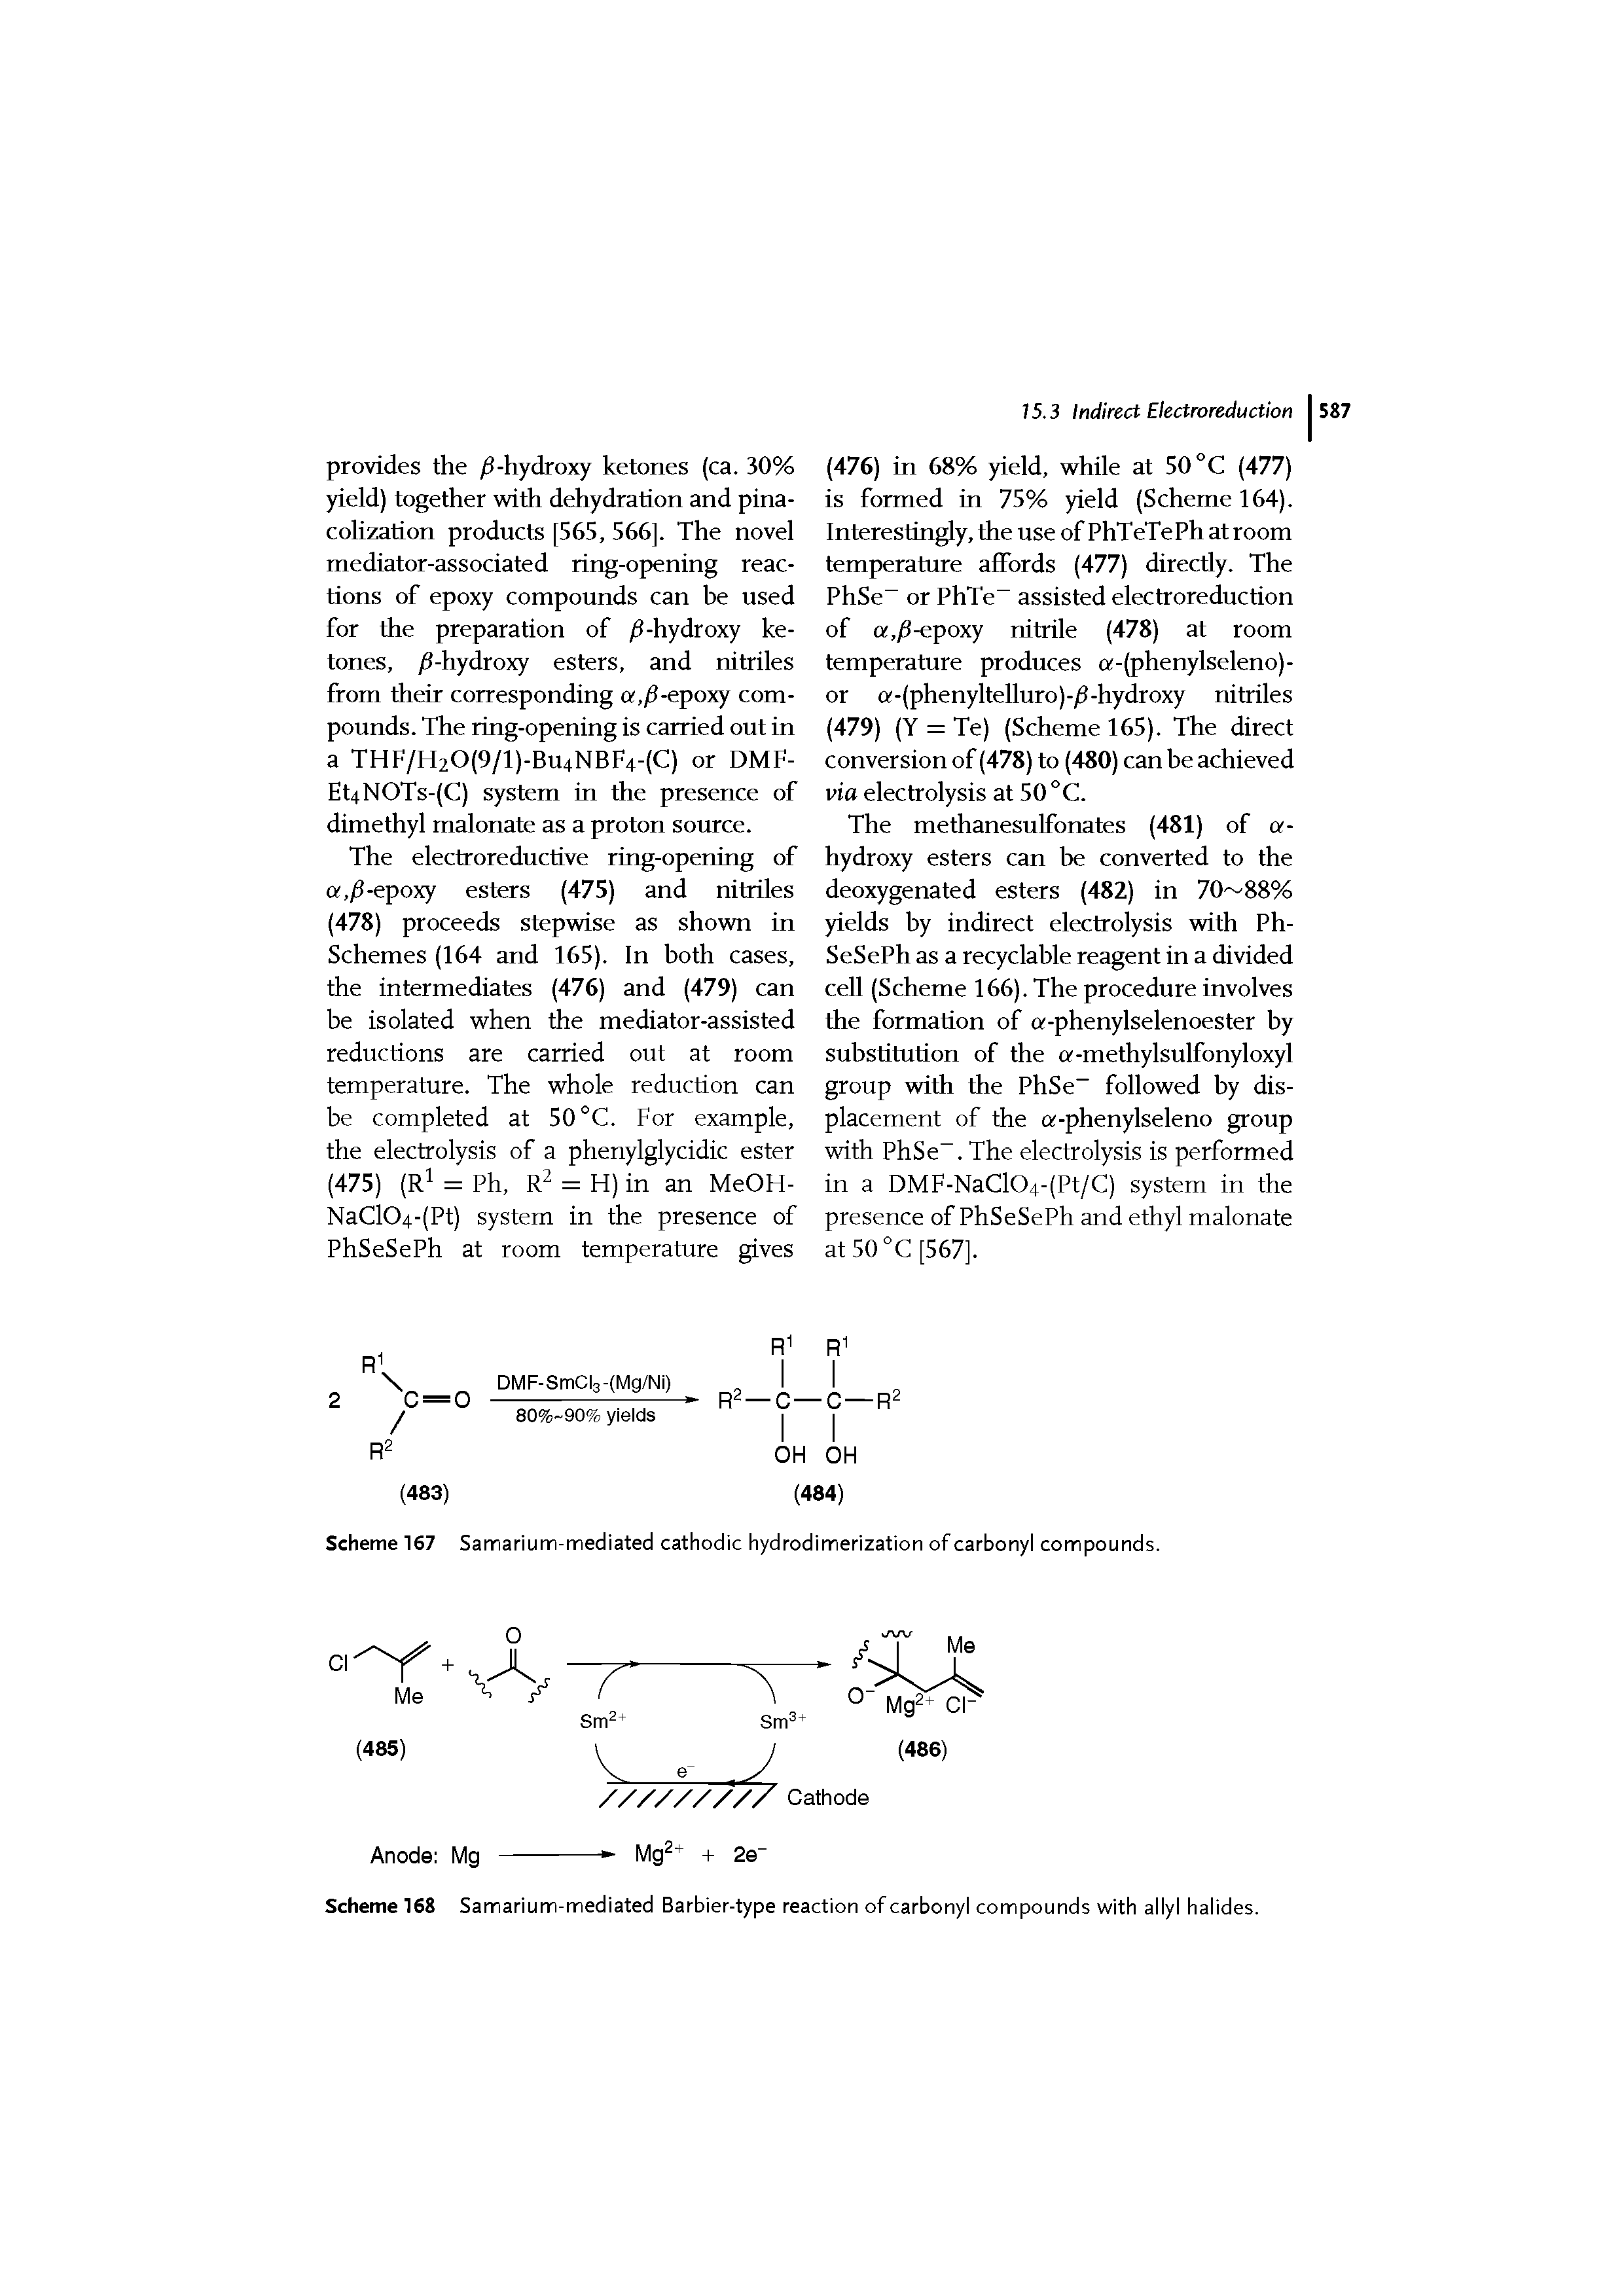 Scheme 167 Samarium-mediated cathodic hydrodimerization of carbonyl compounds.